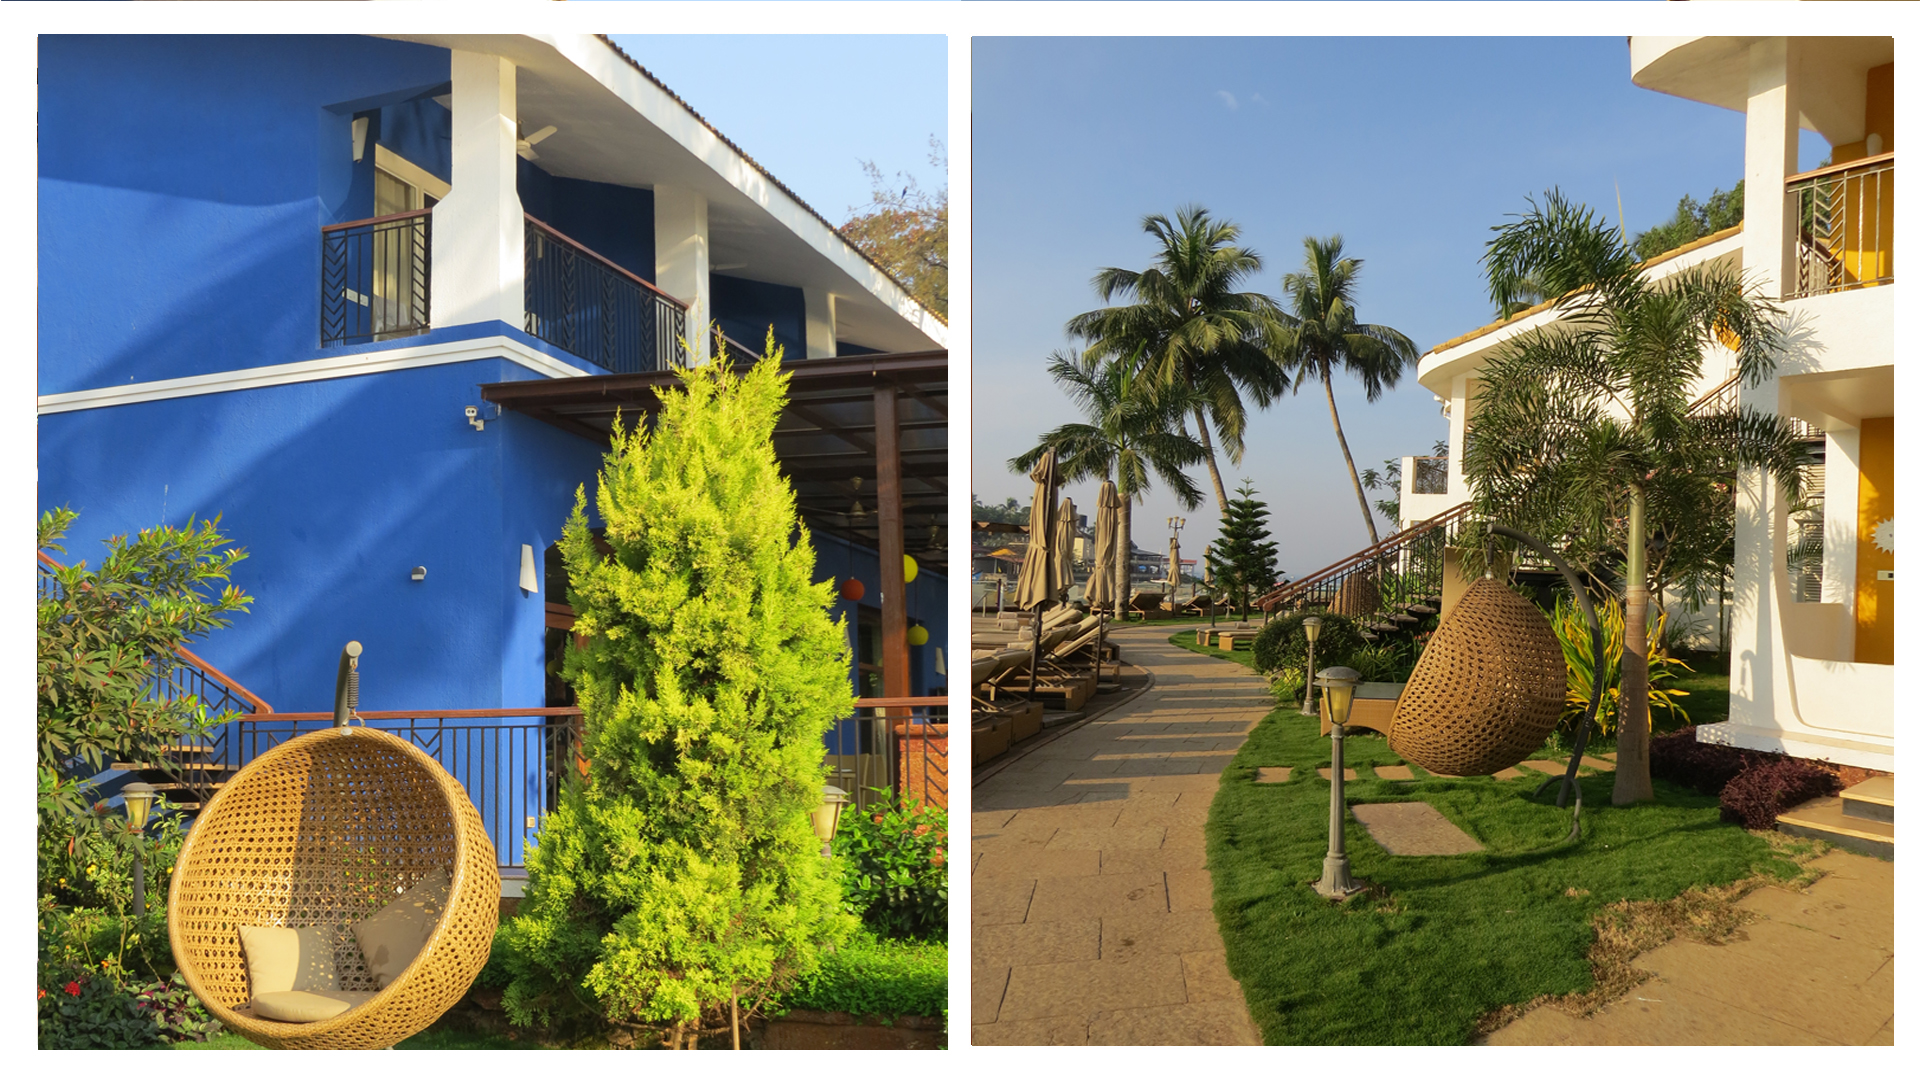 Acron Waterfront Resort Baga, Goa